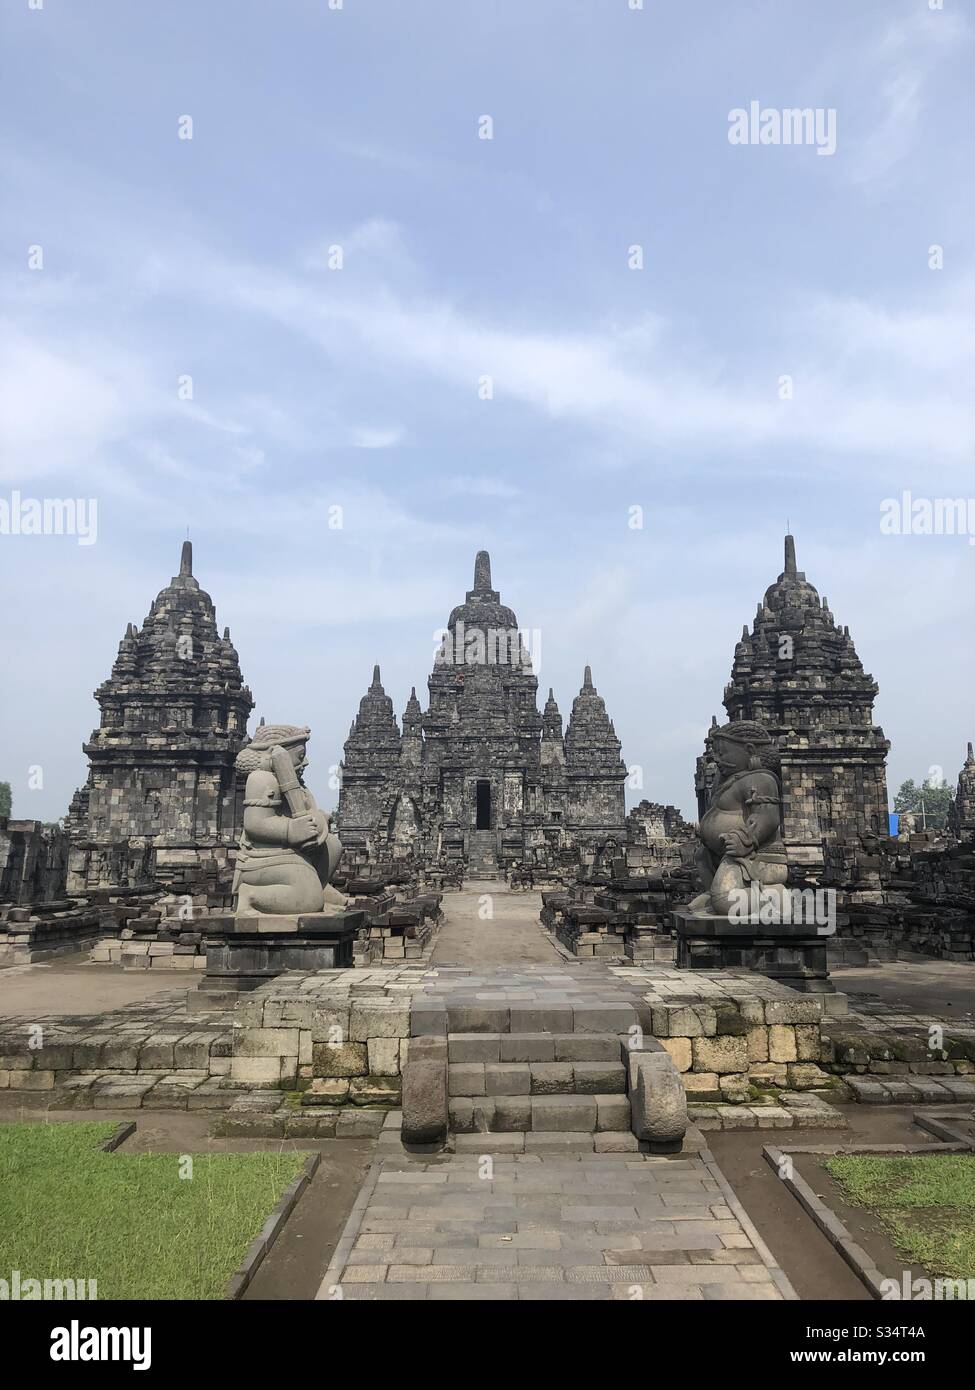 Schöne Tempel in der Nähe des berühmten Prambanan-Tempels auf java, Indonesien. Stockfoto